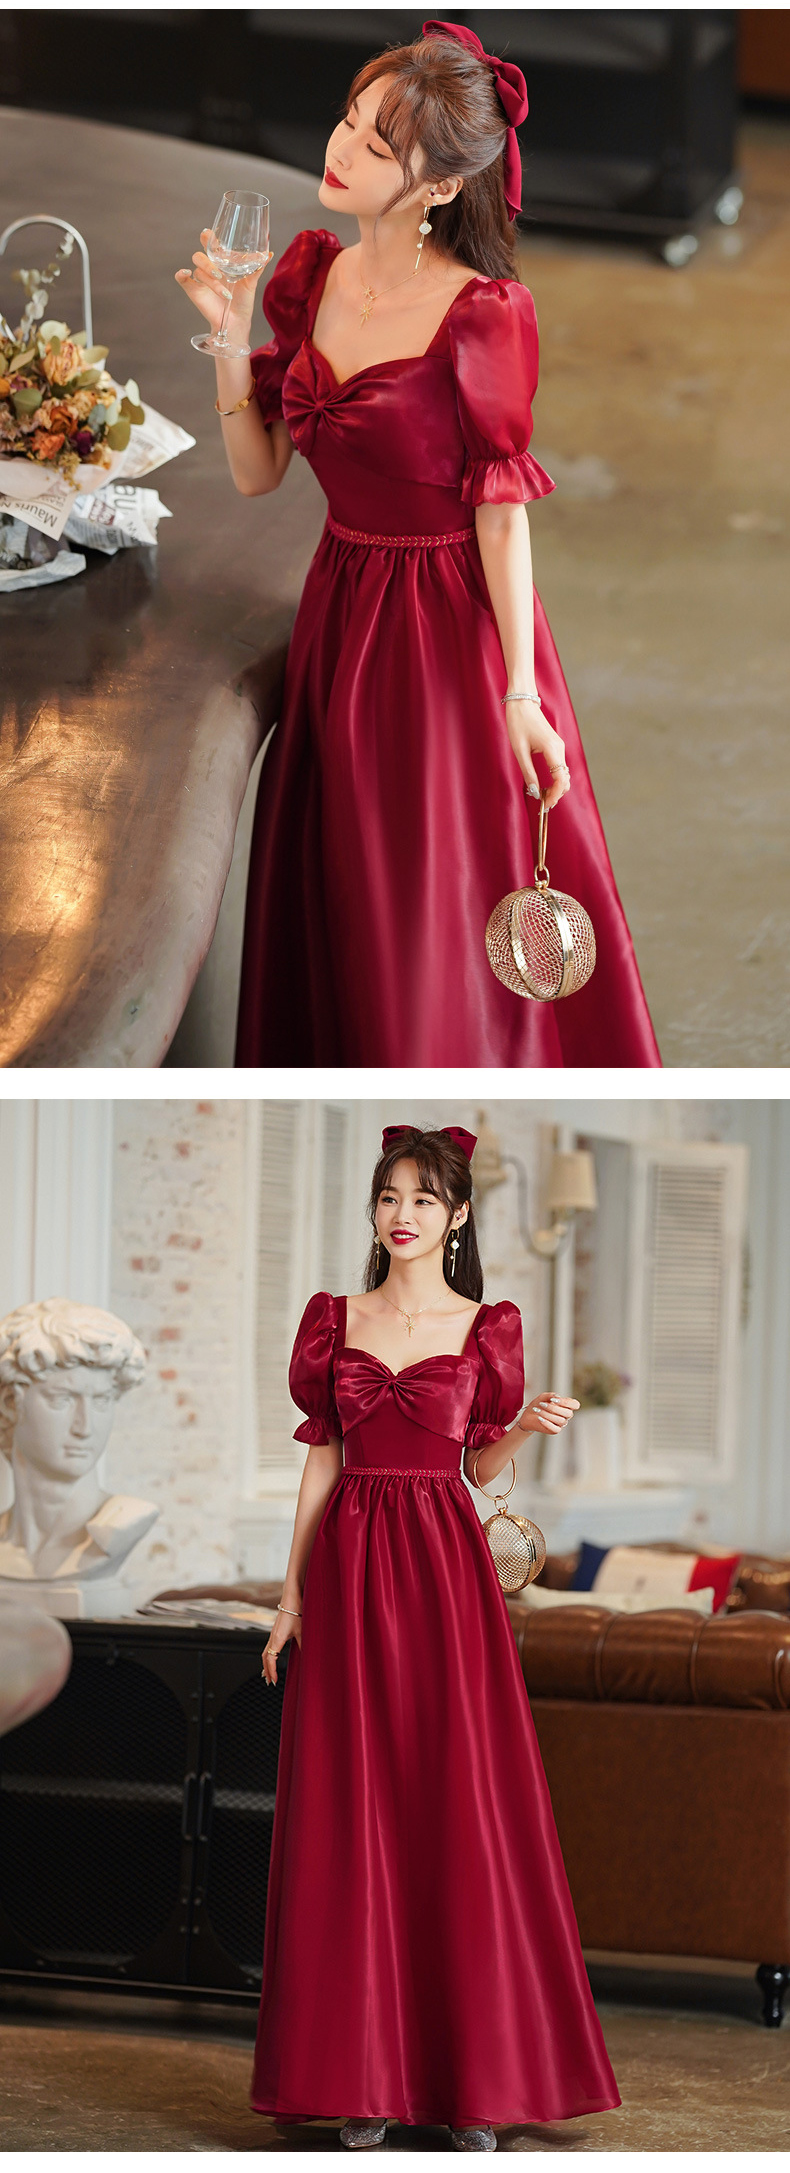 Simple Elegant Red Satin Long Evening Wedding Dress Plus Size13